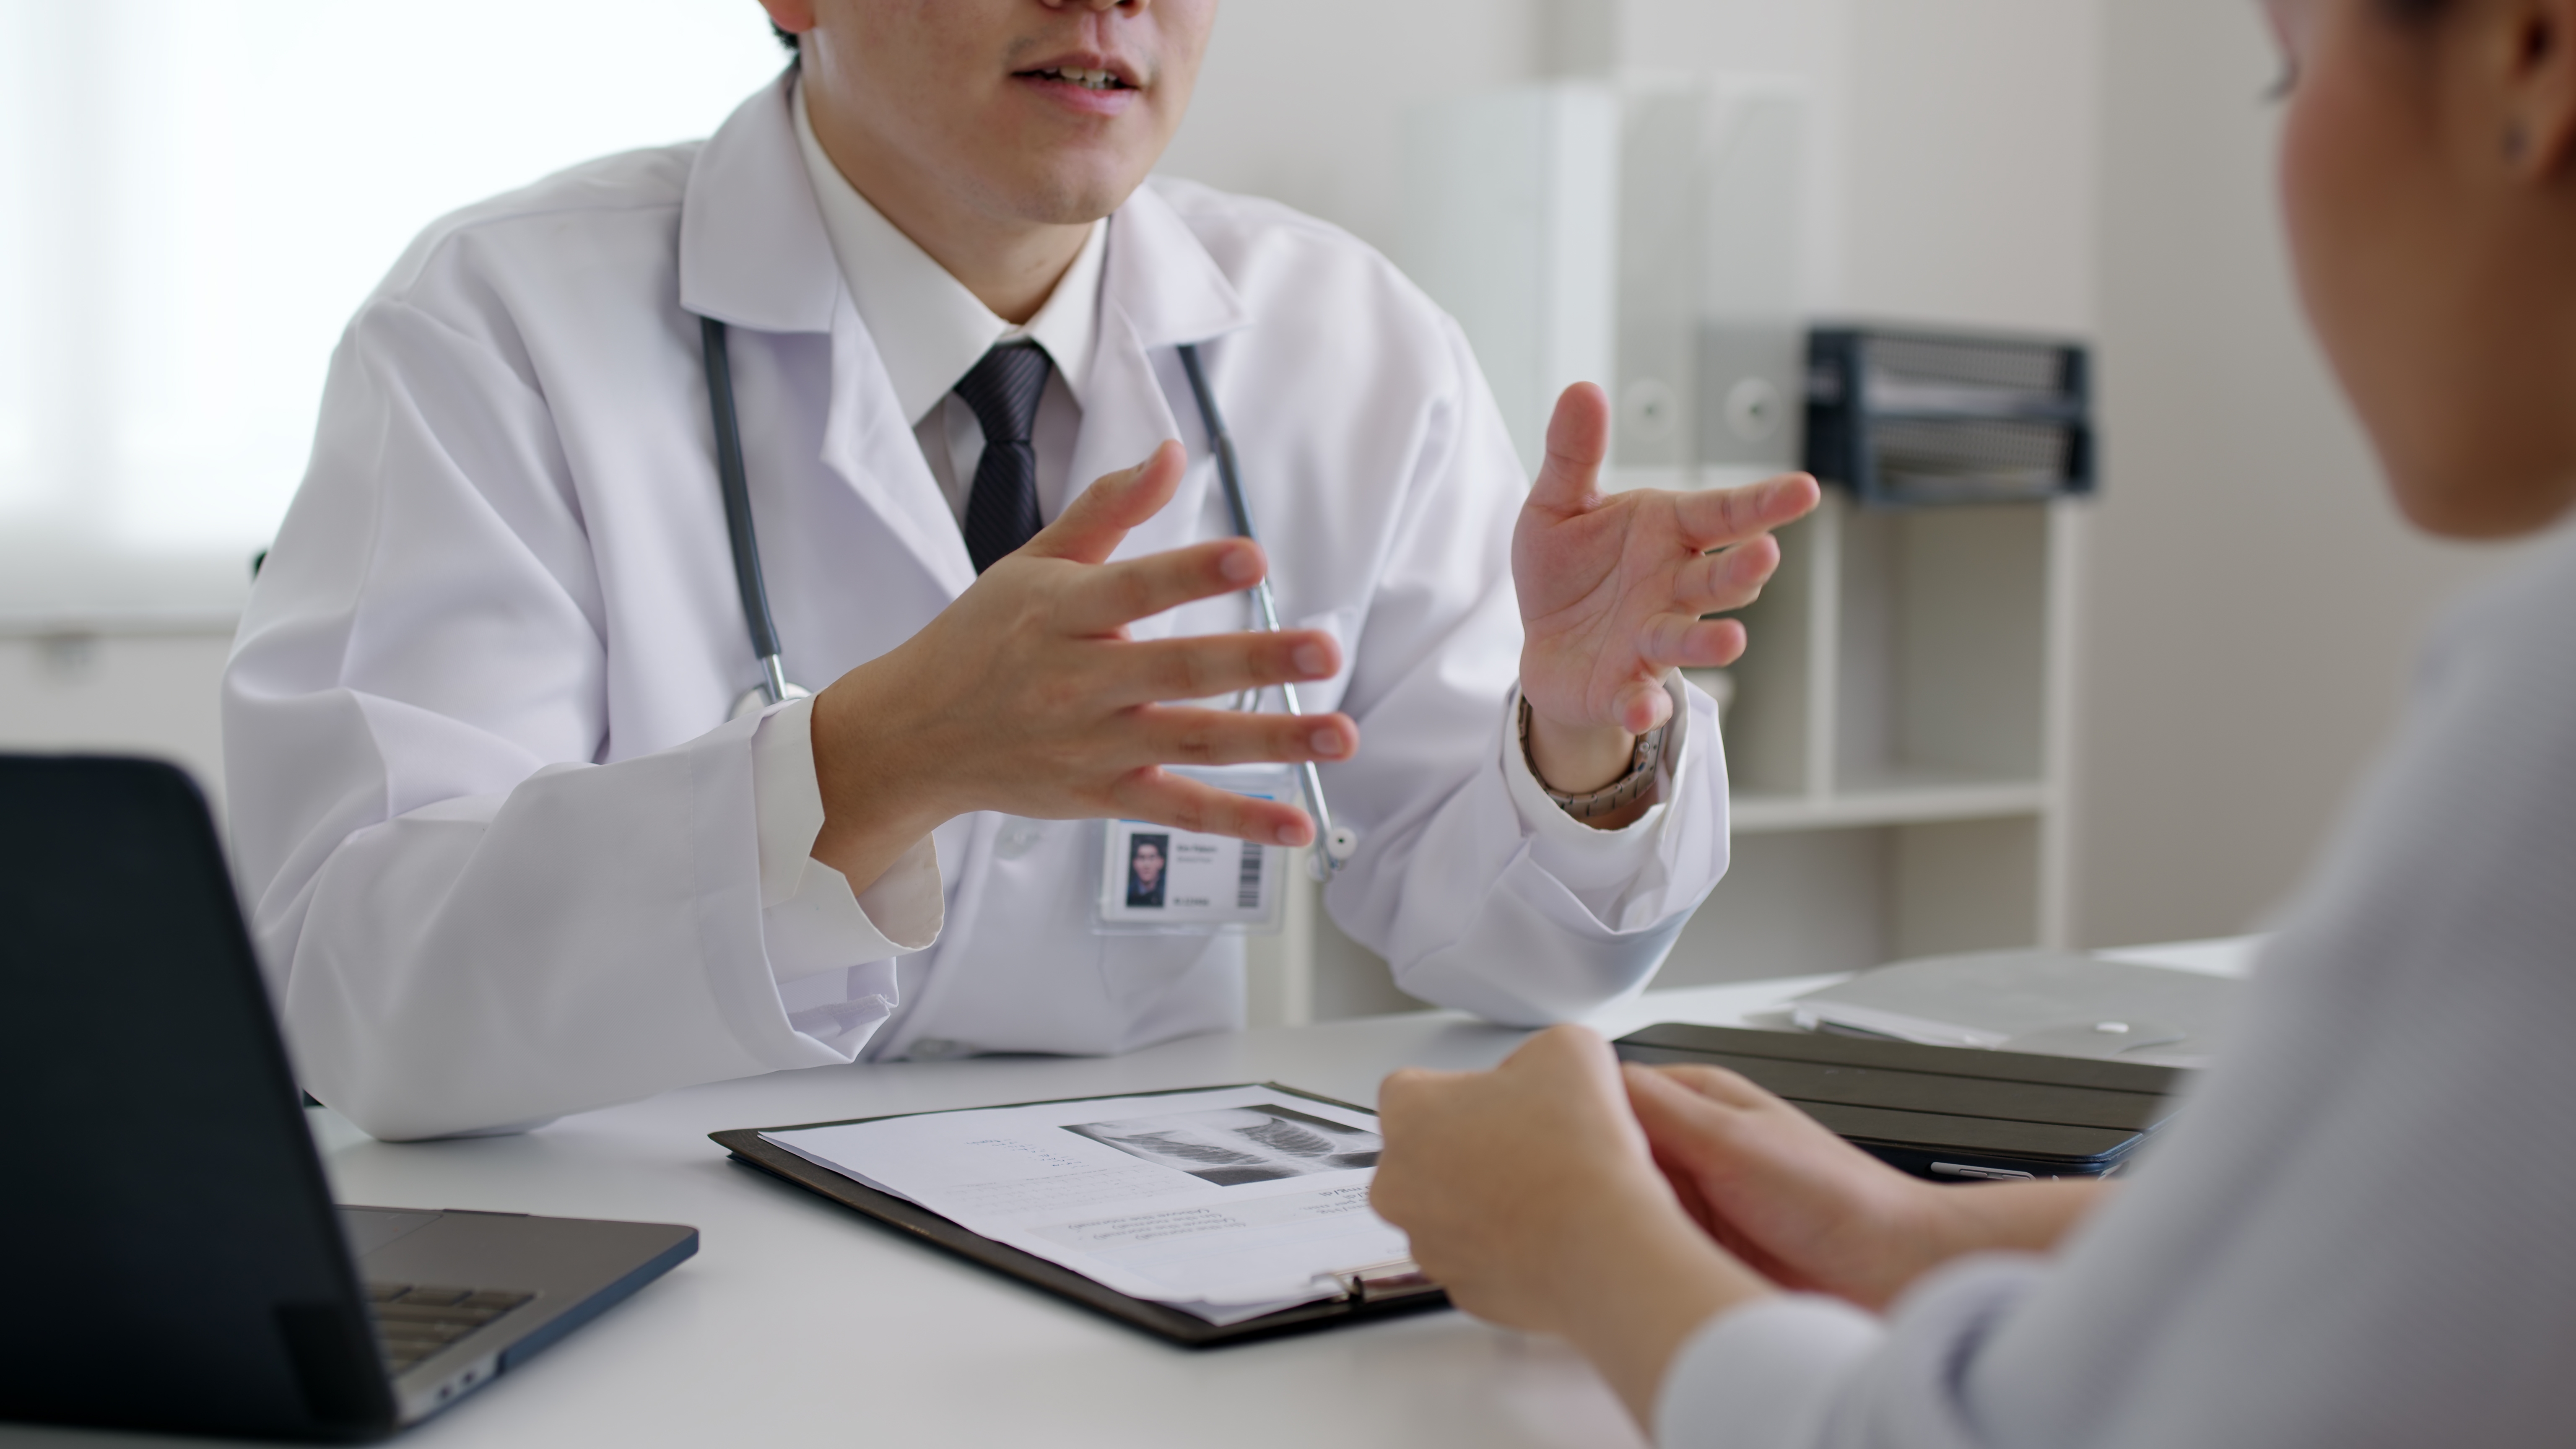 Femme consultant un médecin | Source : Shutterstock